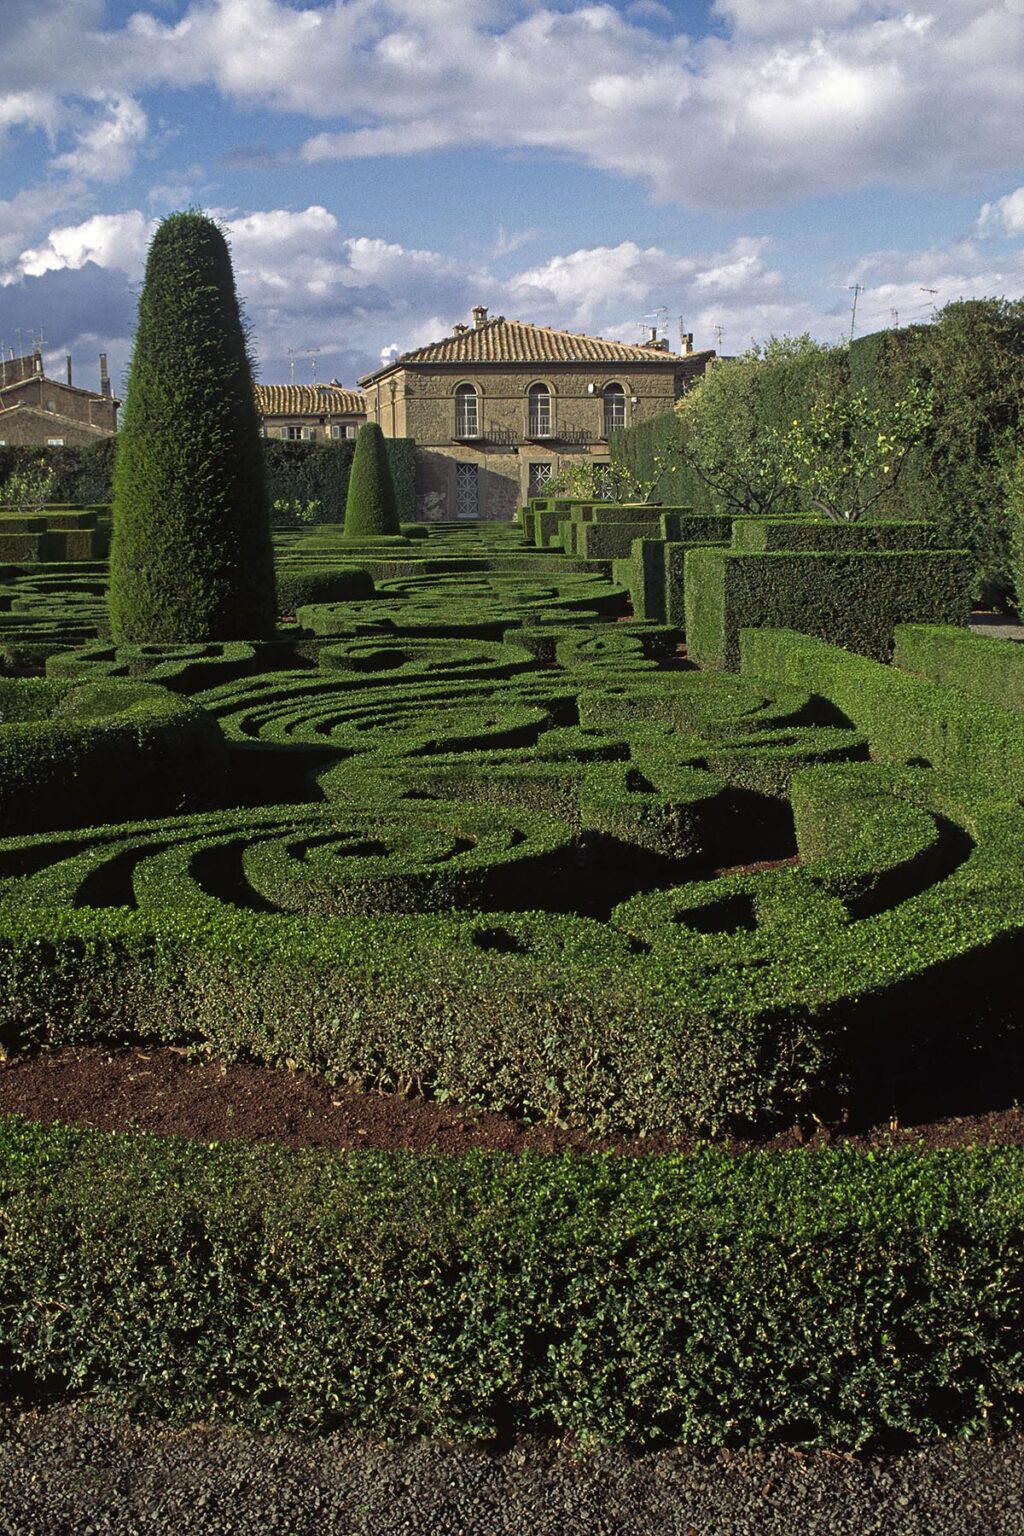 Sculpted hedges at VILLA LANTE (Italian Renaissance Garden, 1566), VITERBO - TUSCANY, ITALY